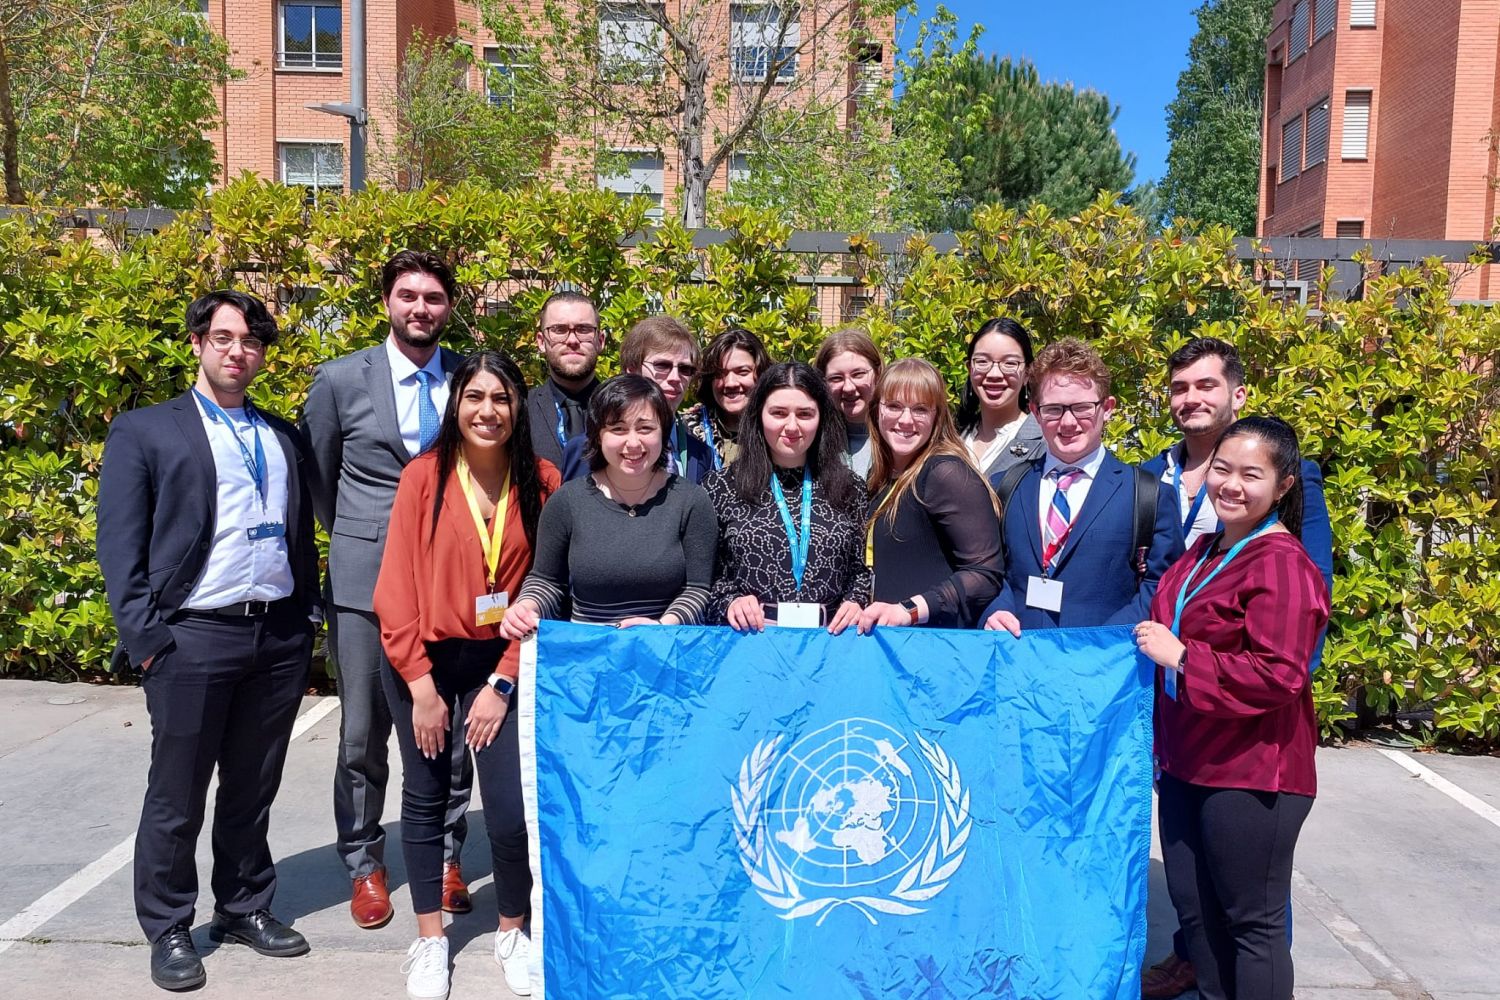 The Carthage Model UN team at the 2022 BIMUN Model UN Conference in Spain.